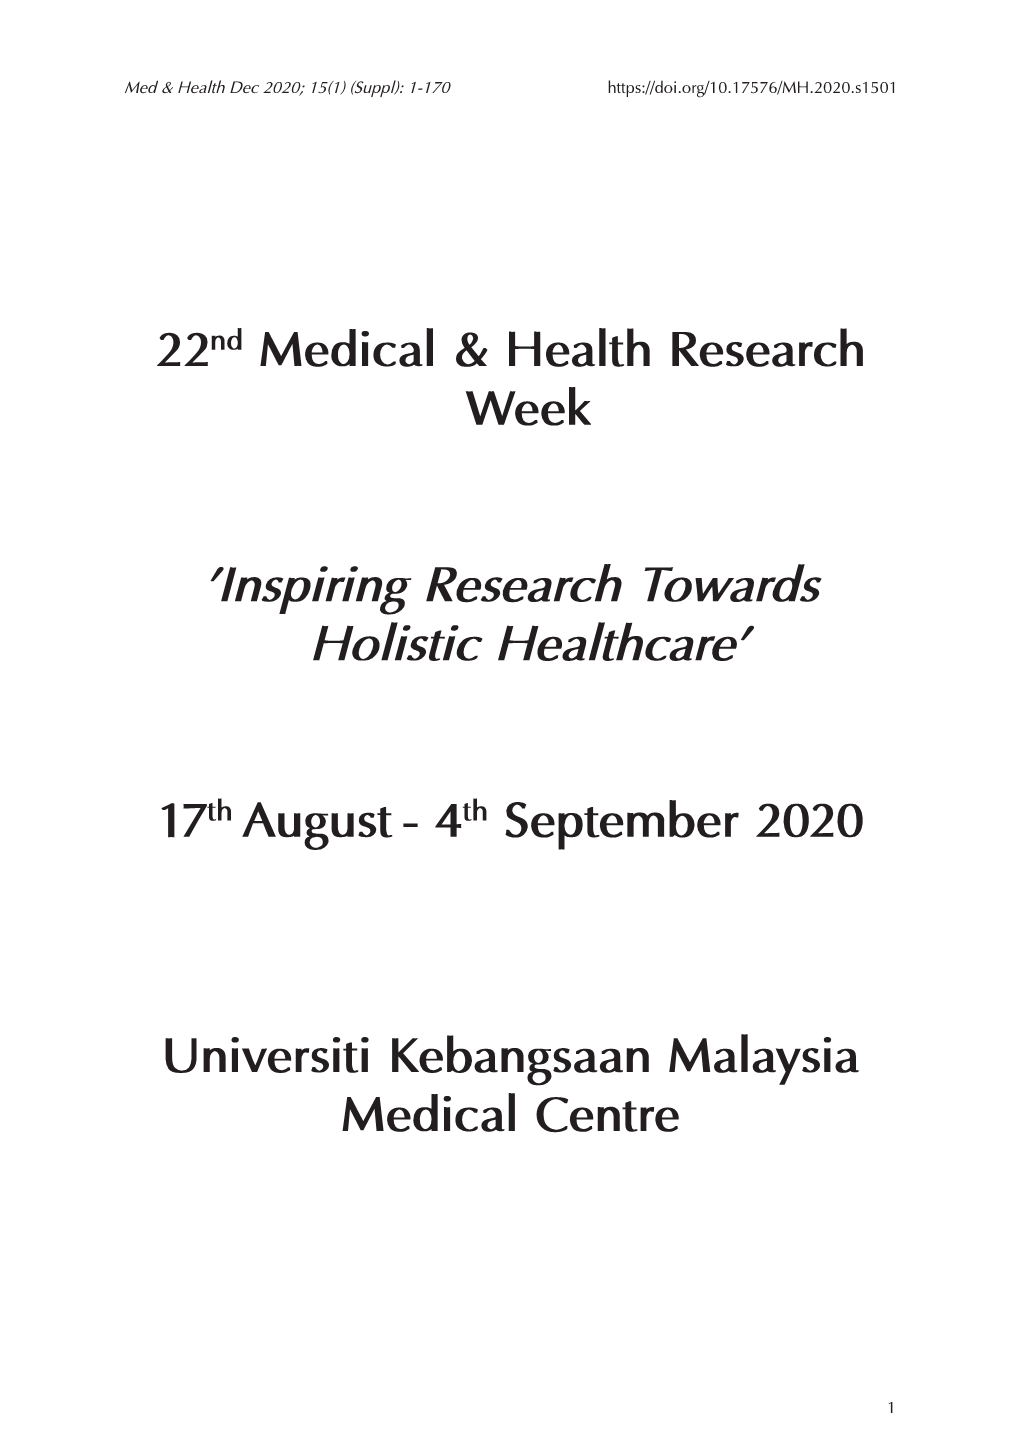 22Nd Medical & Health Research Week